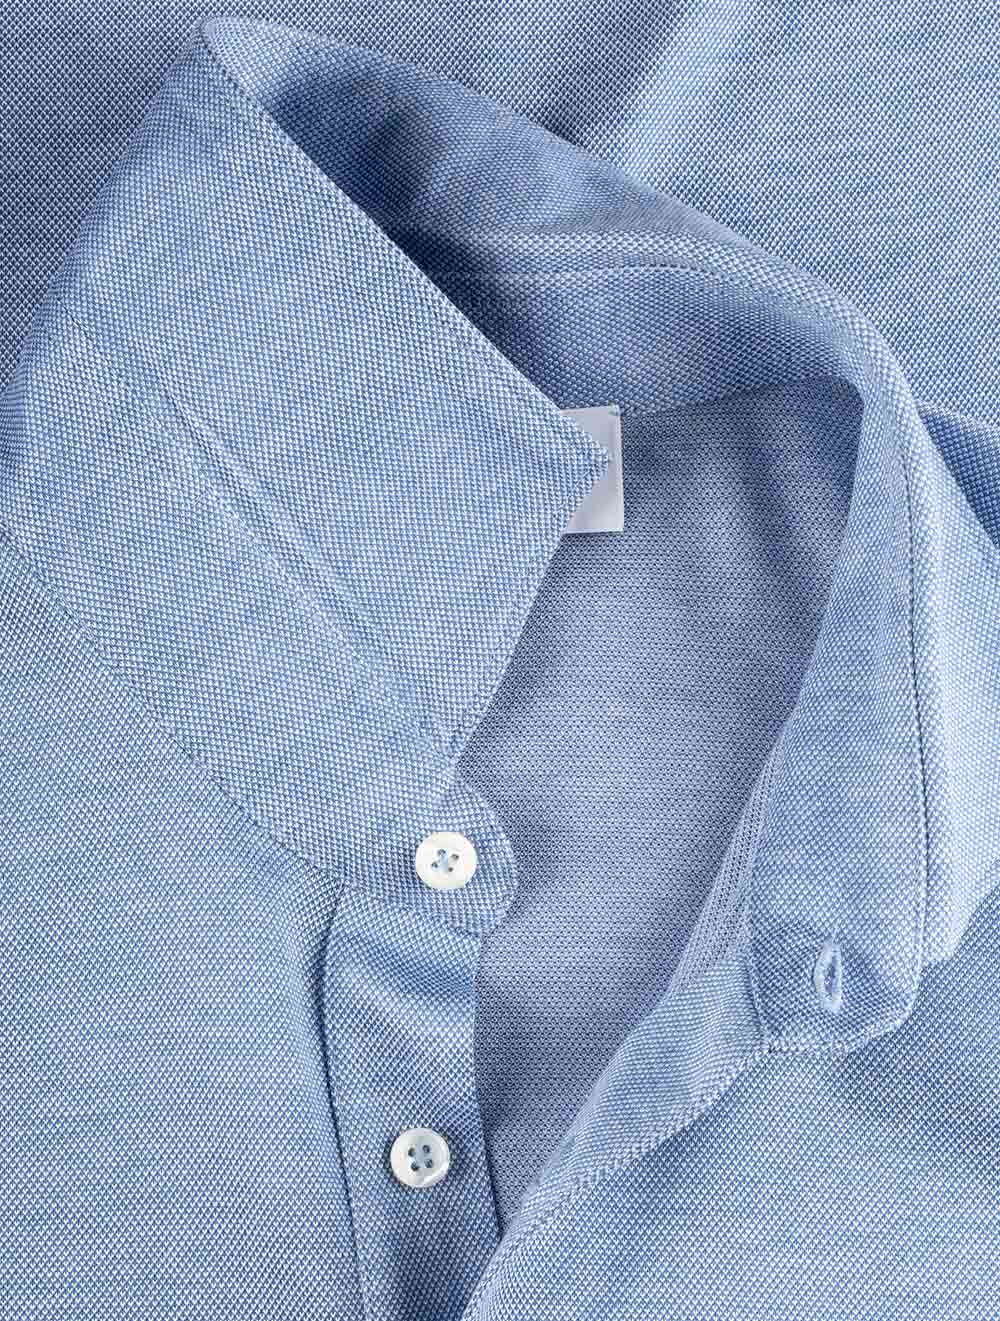 3 button Polo Shirt Light Blue